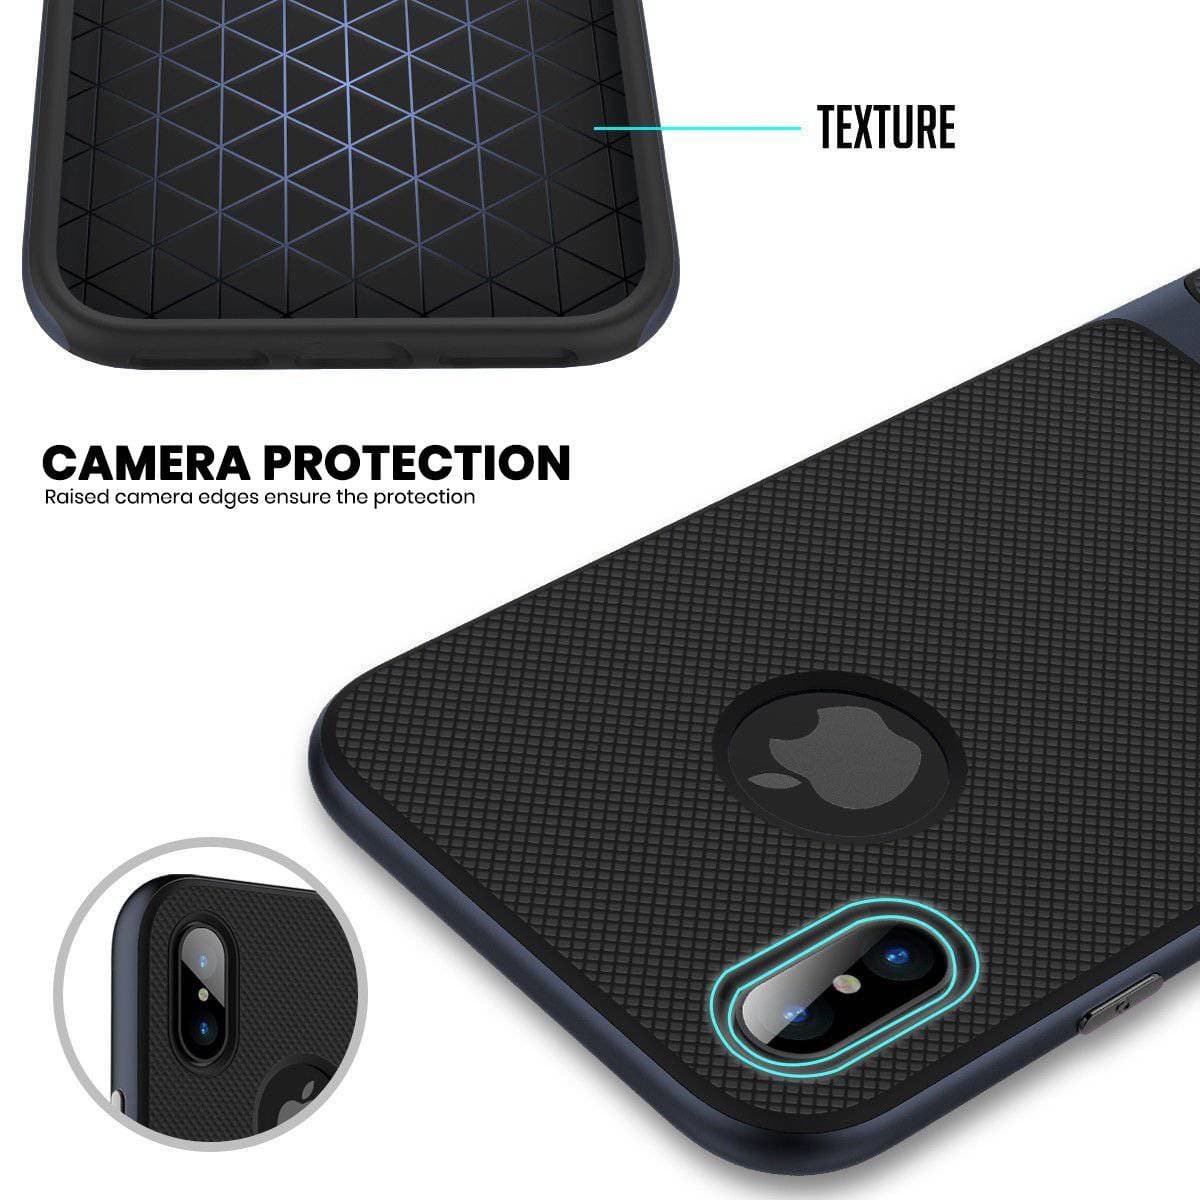 Heavy duty metallic bumper stylish protection iPhone Case - iiCase